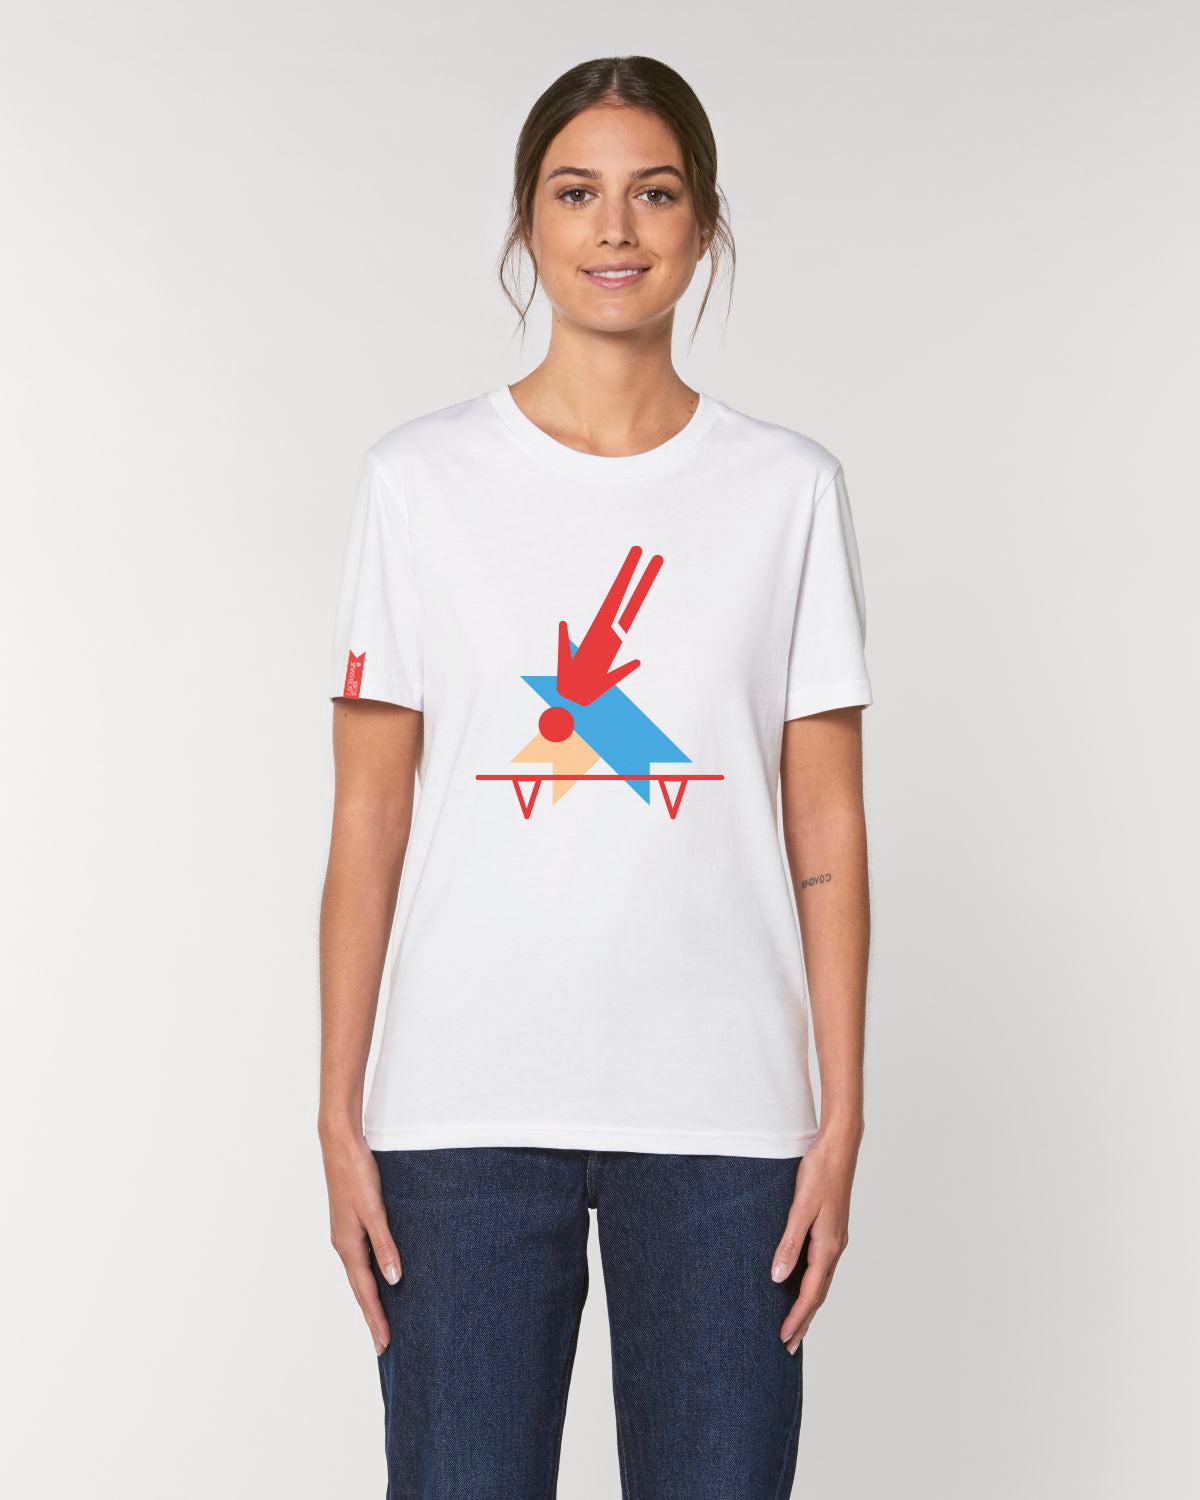 UNISEX Trampolin-T-Shirts